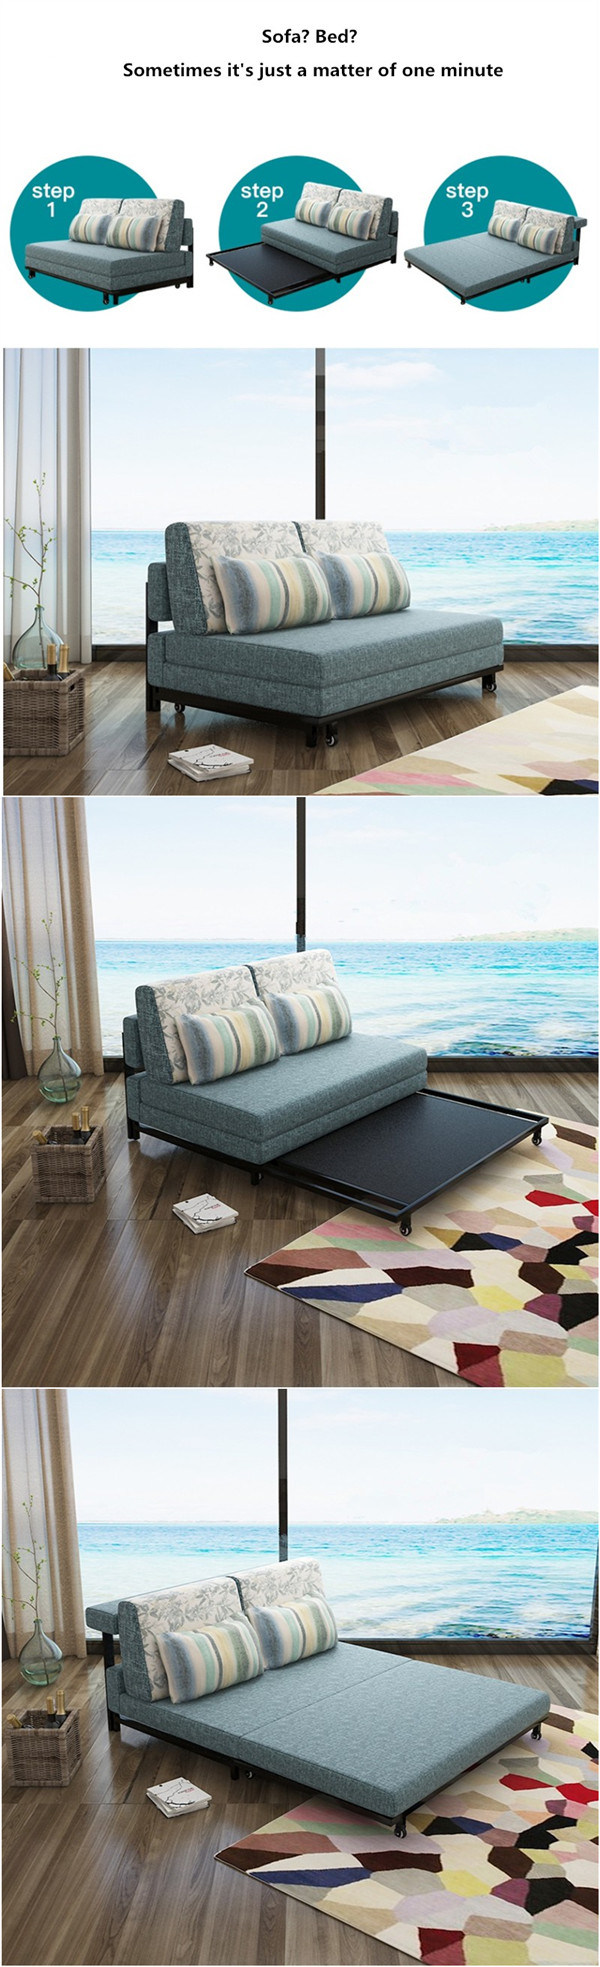 Wholesale Linen Foam Sleeping Foldable Sofa Bed Futon Bed (192*120cm)